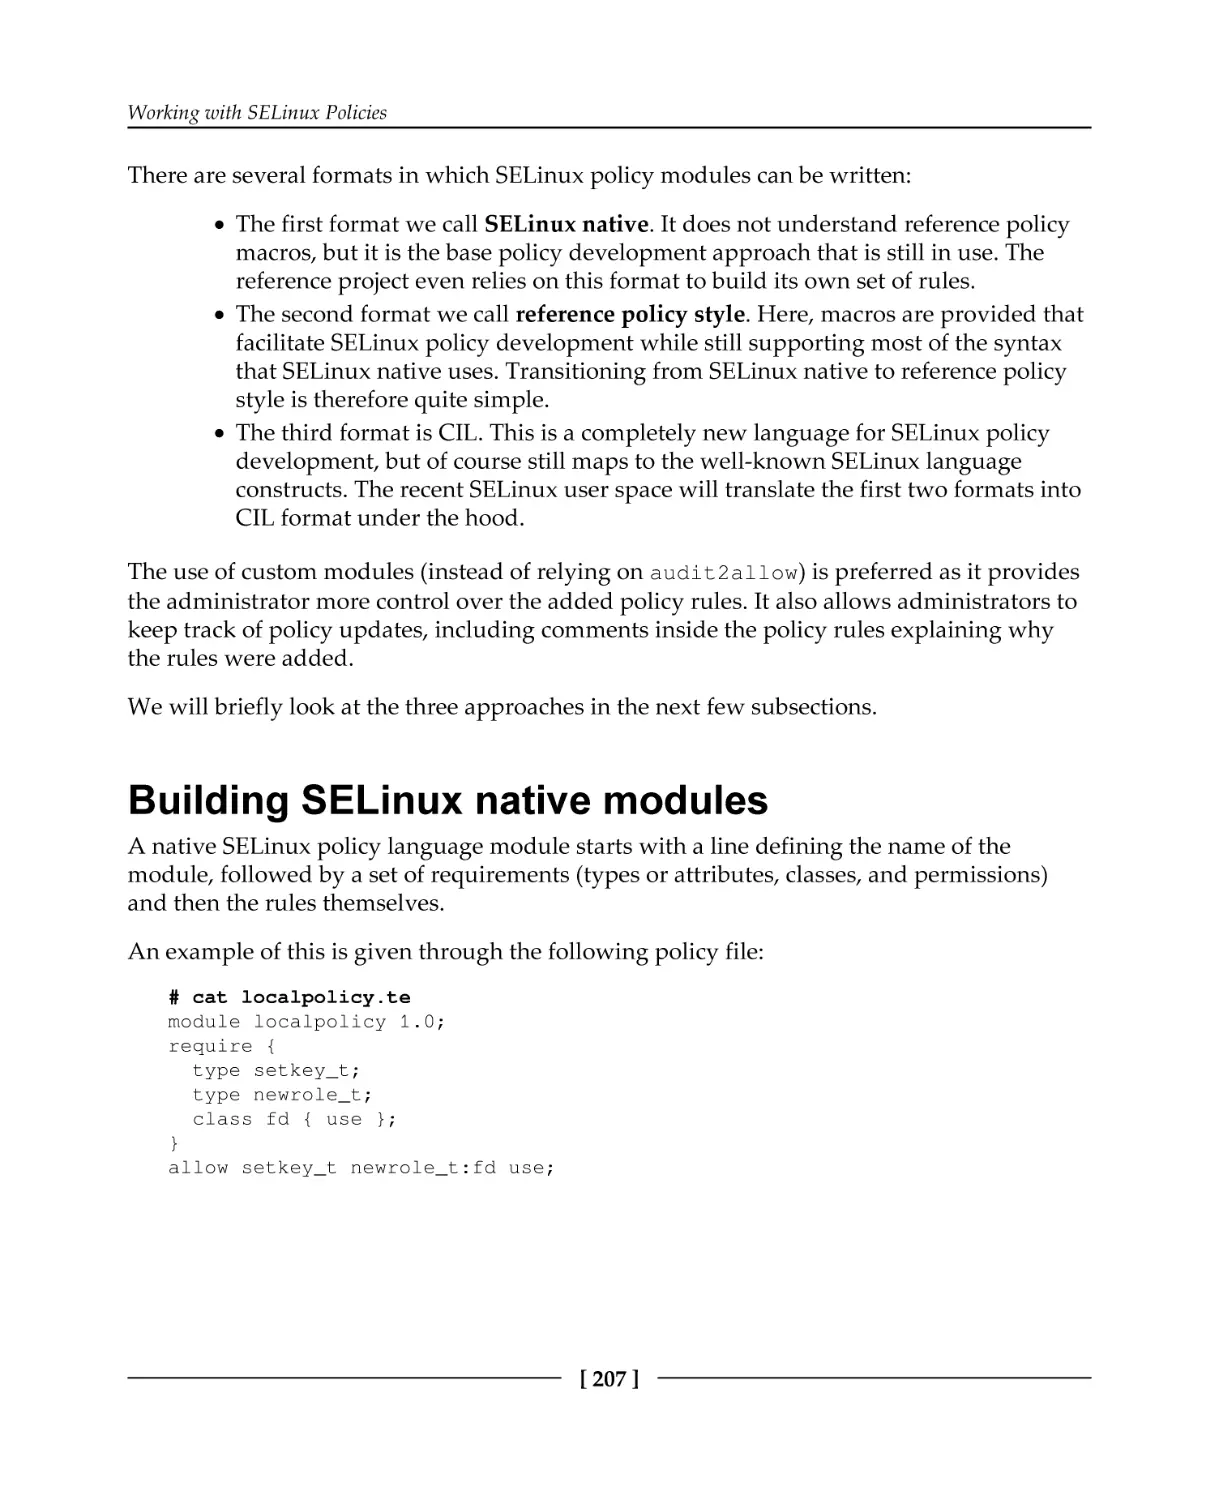 Building SELinux native modules